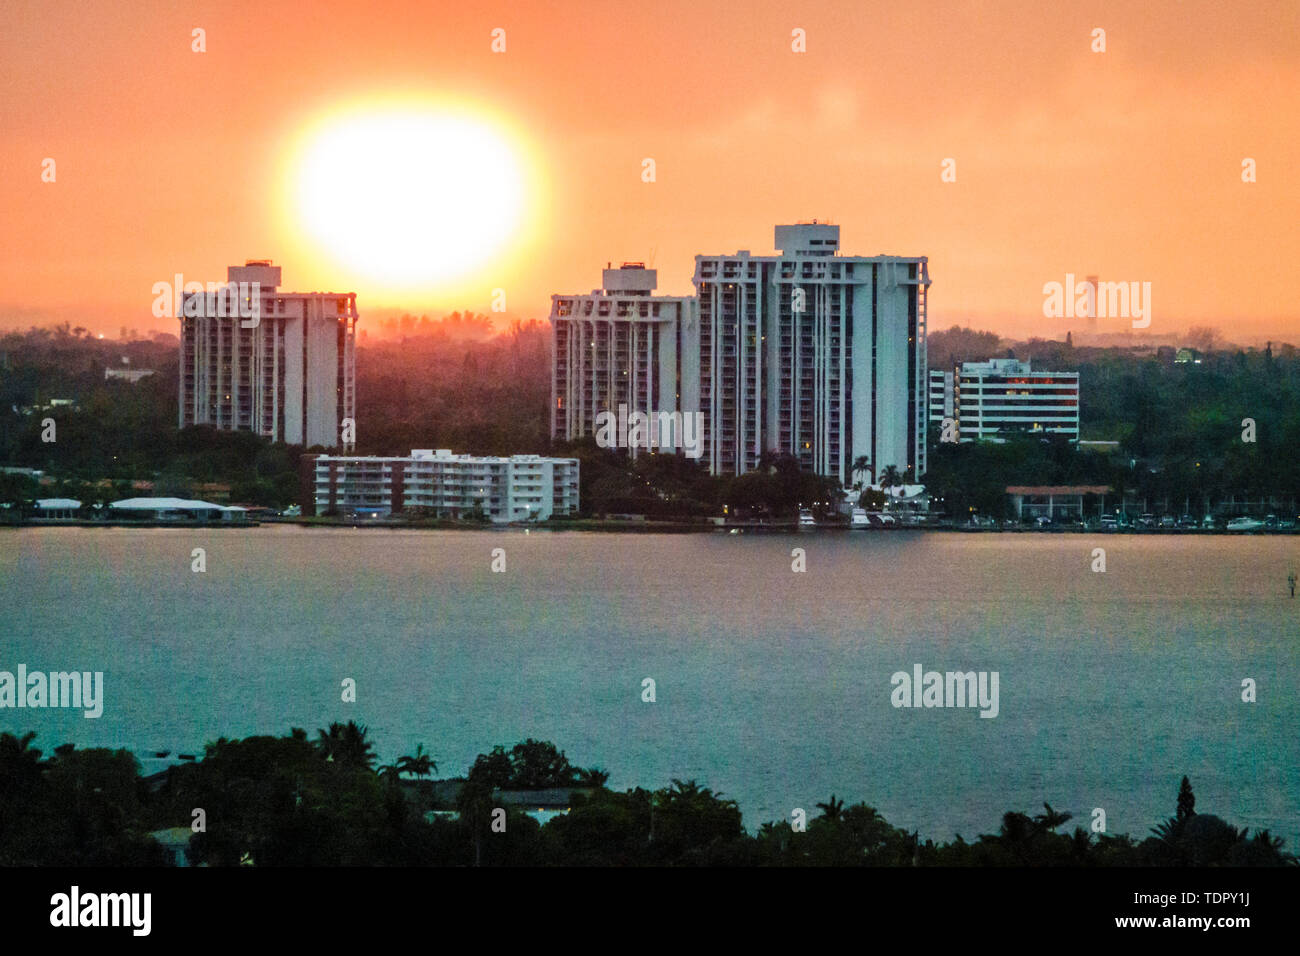 Miami Florida,Biscayne Bay sunset,city skyline,waterfront,residential buildings,hazy sky,setting sun,FL190505013 Stock Photo